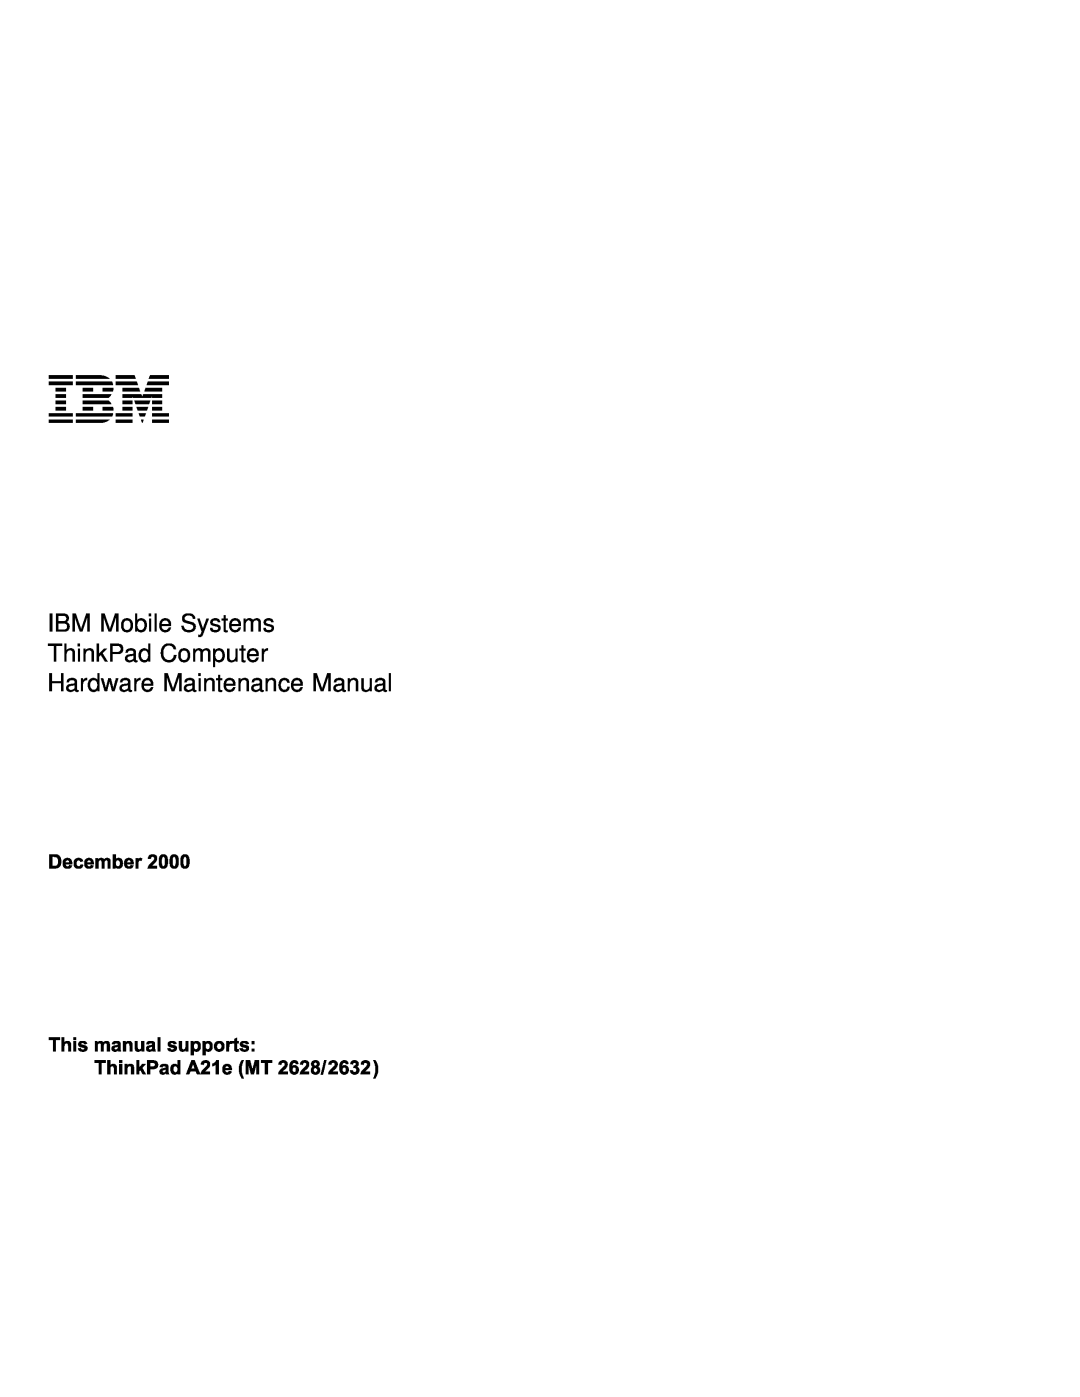 IBM MT 2632 manual IBM Mobile Systems ThinkPad Computer Hardware Maintenance Manual 